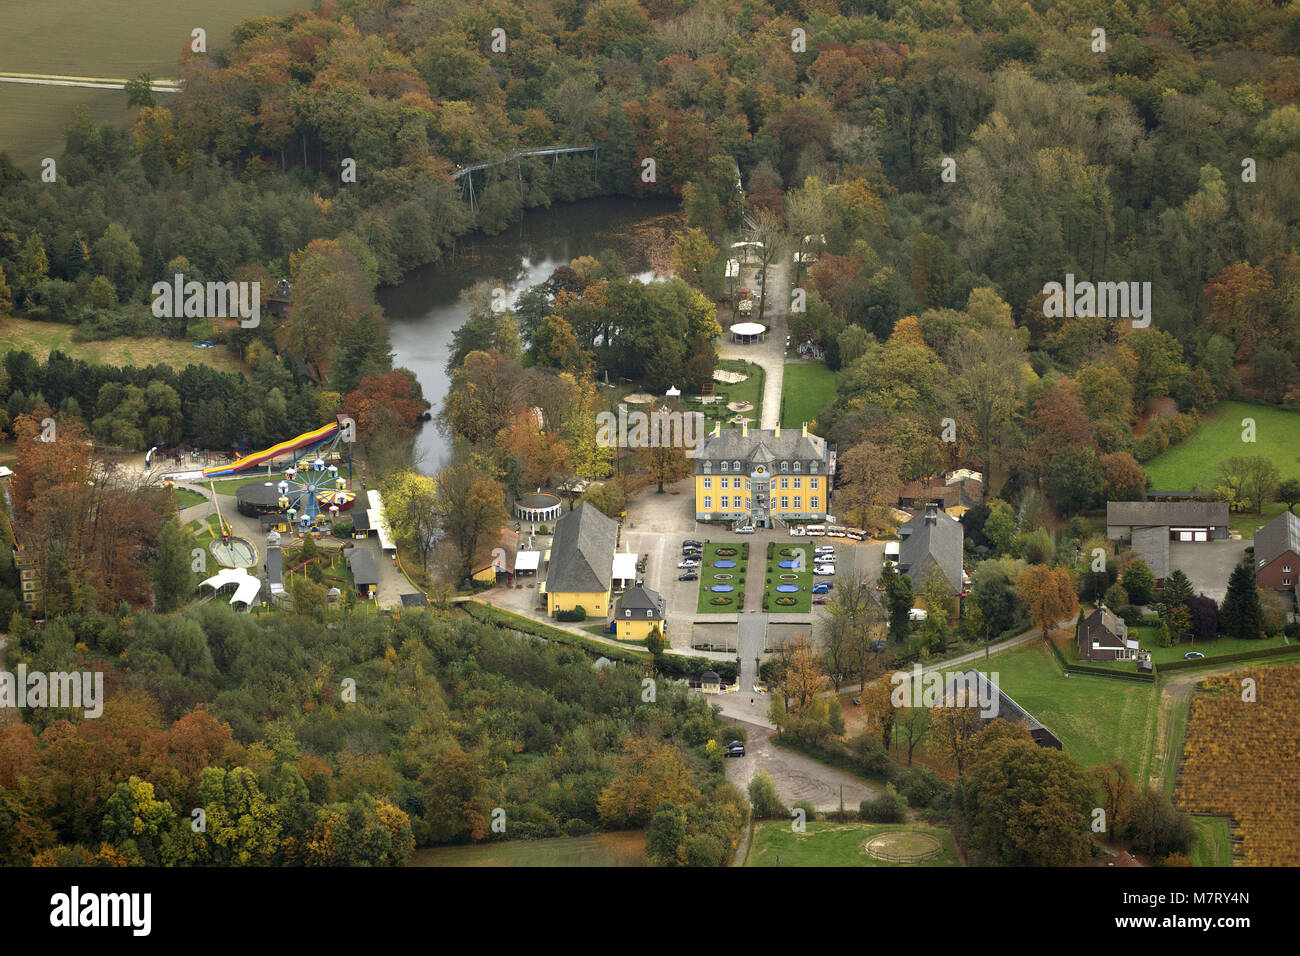 Vista aerea, il Parco a Tema di Schloss Beck in golden ottobre, Kirchhellen, Bottrop, Ruhr, Renania settentrionale-Vestfalia, Germania, Europa, uccelli-eyes view, antenna v Foto Stock